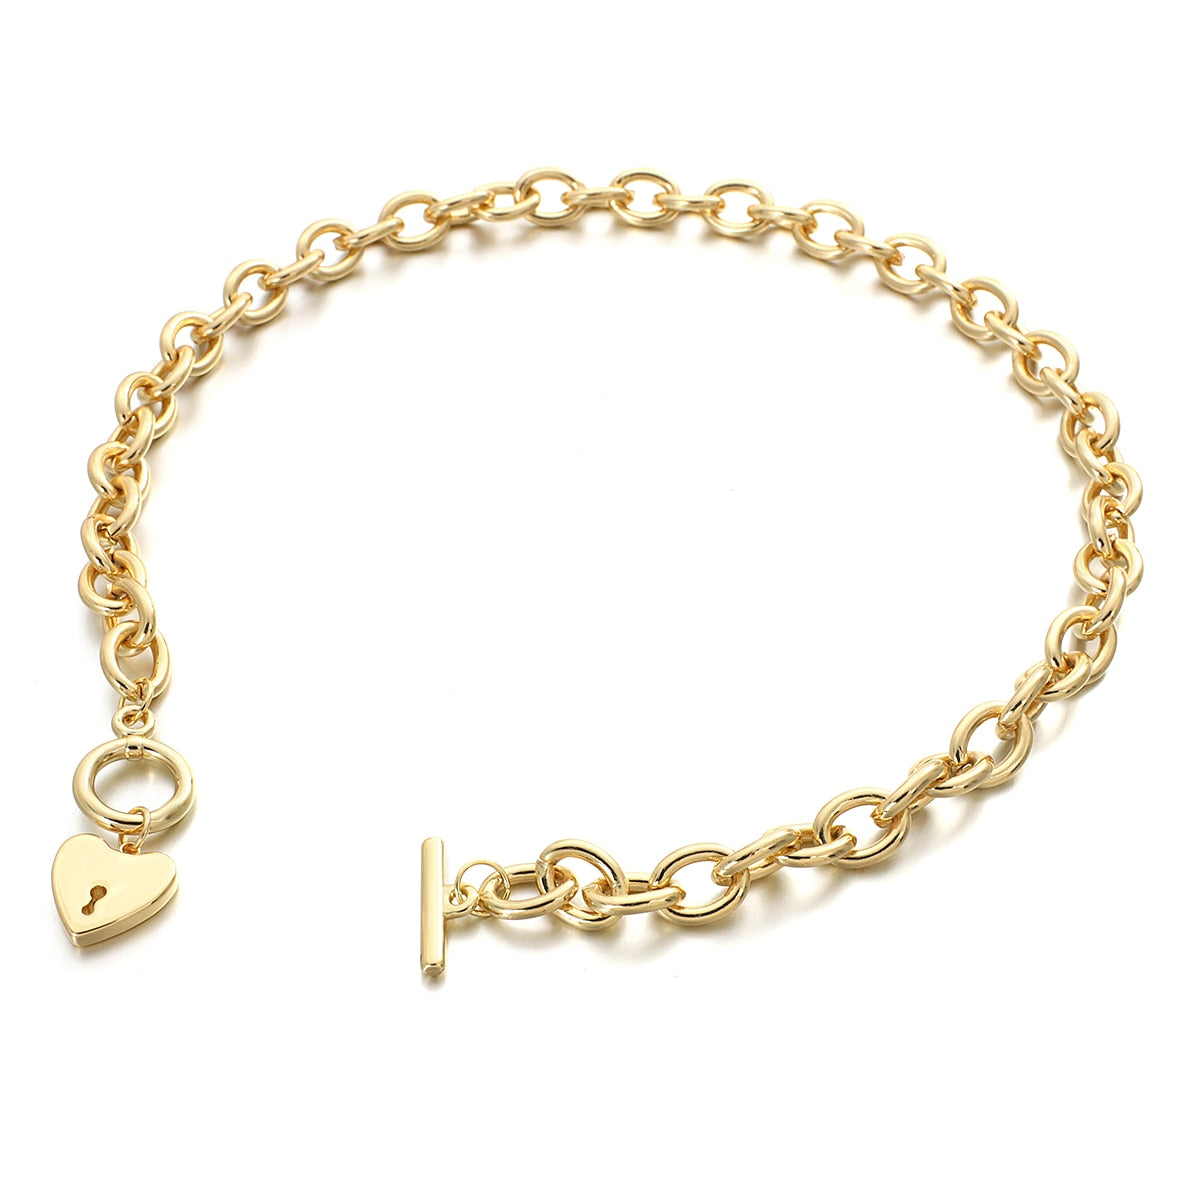 Thick Chain Clasp Gold Color Claps Necklaces Heart Pendant